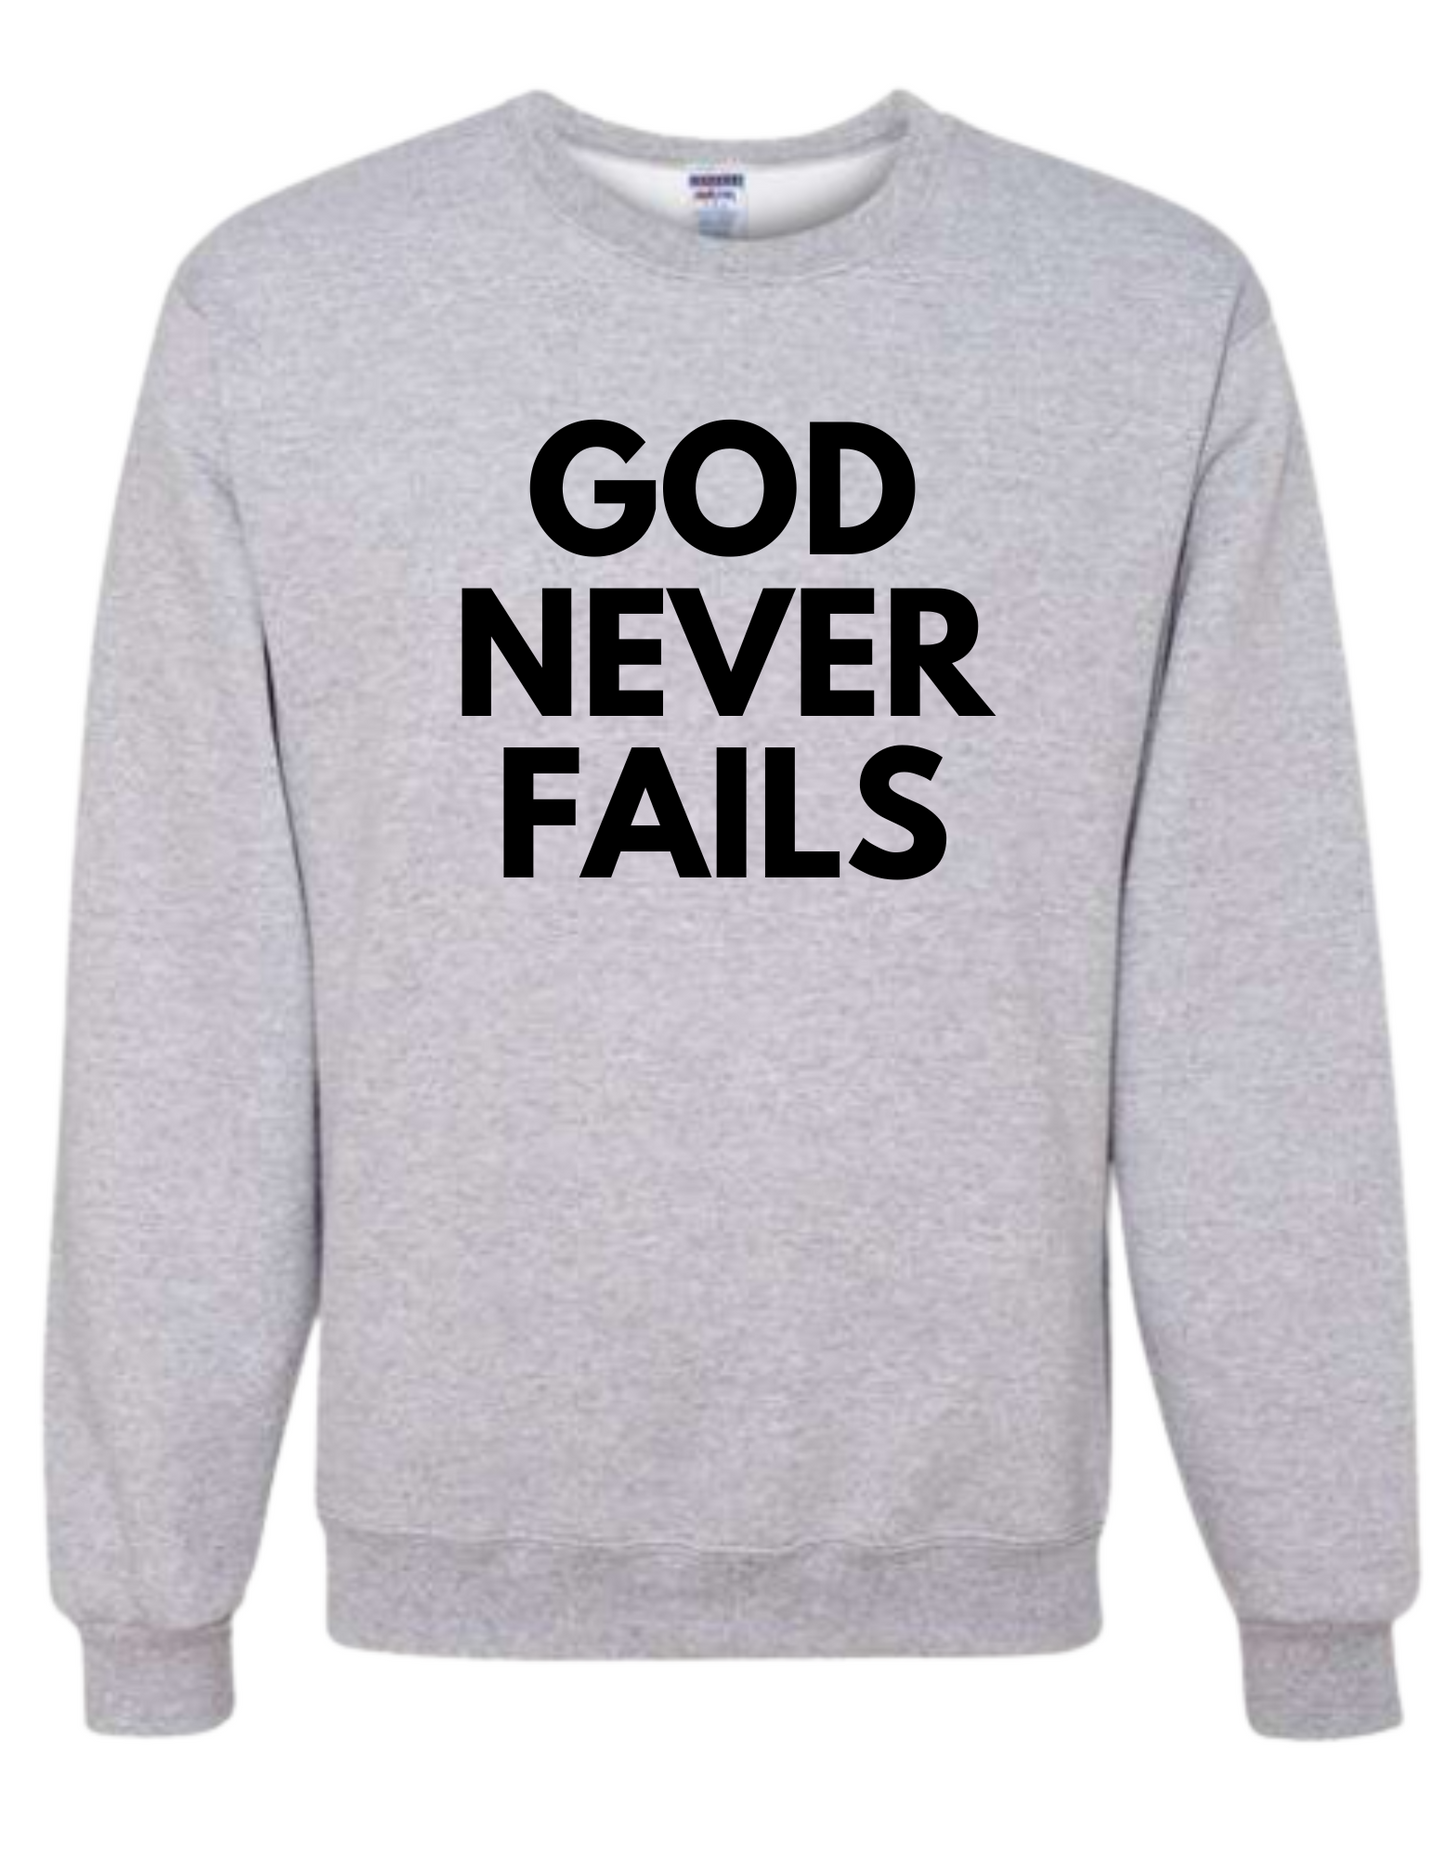 GOD NEVER FAILS Crewneck Sweatshirt